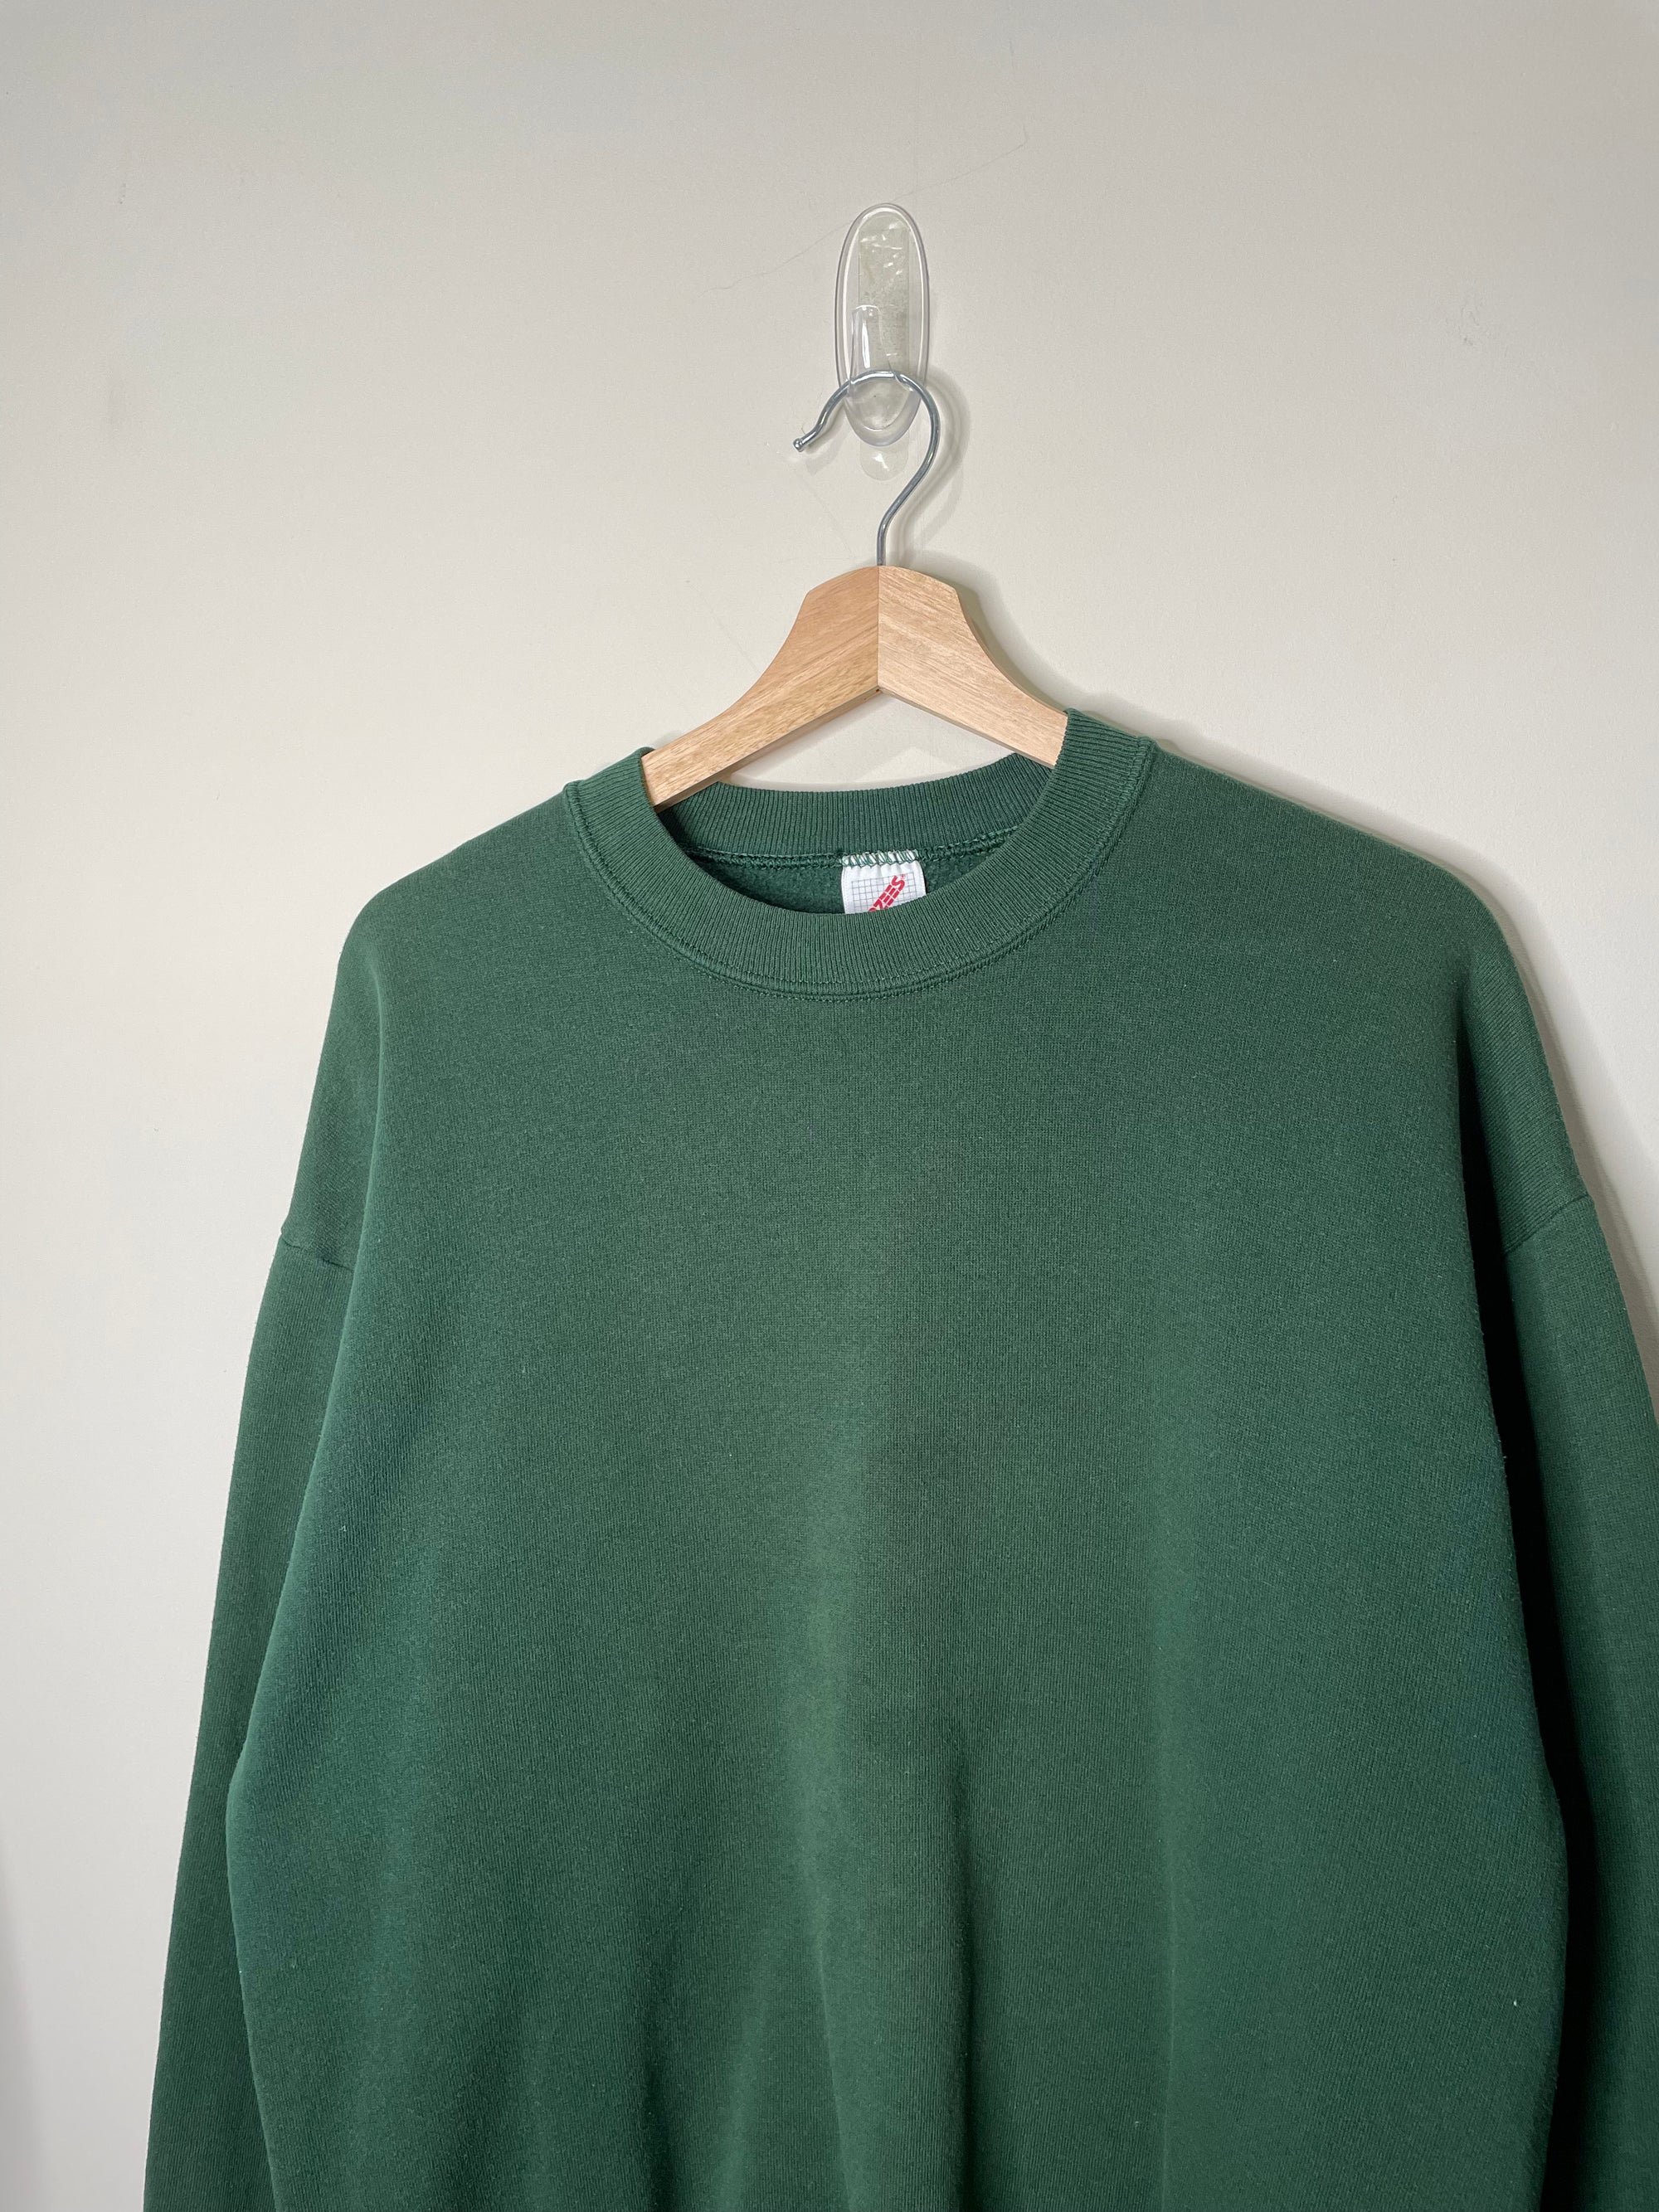 1980s Faded Green Blank Sweatshirt (M/L)